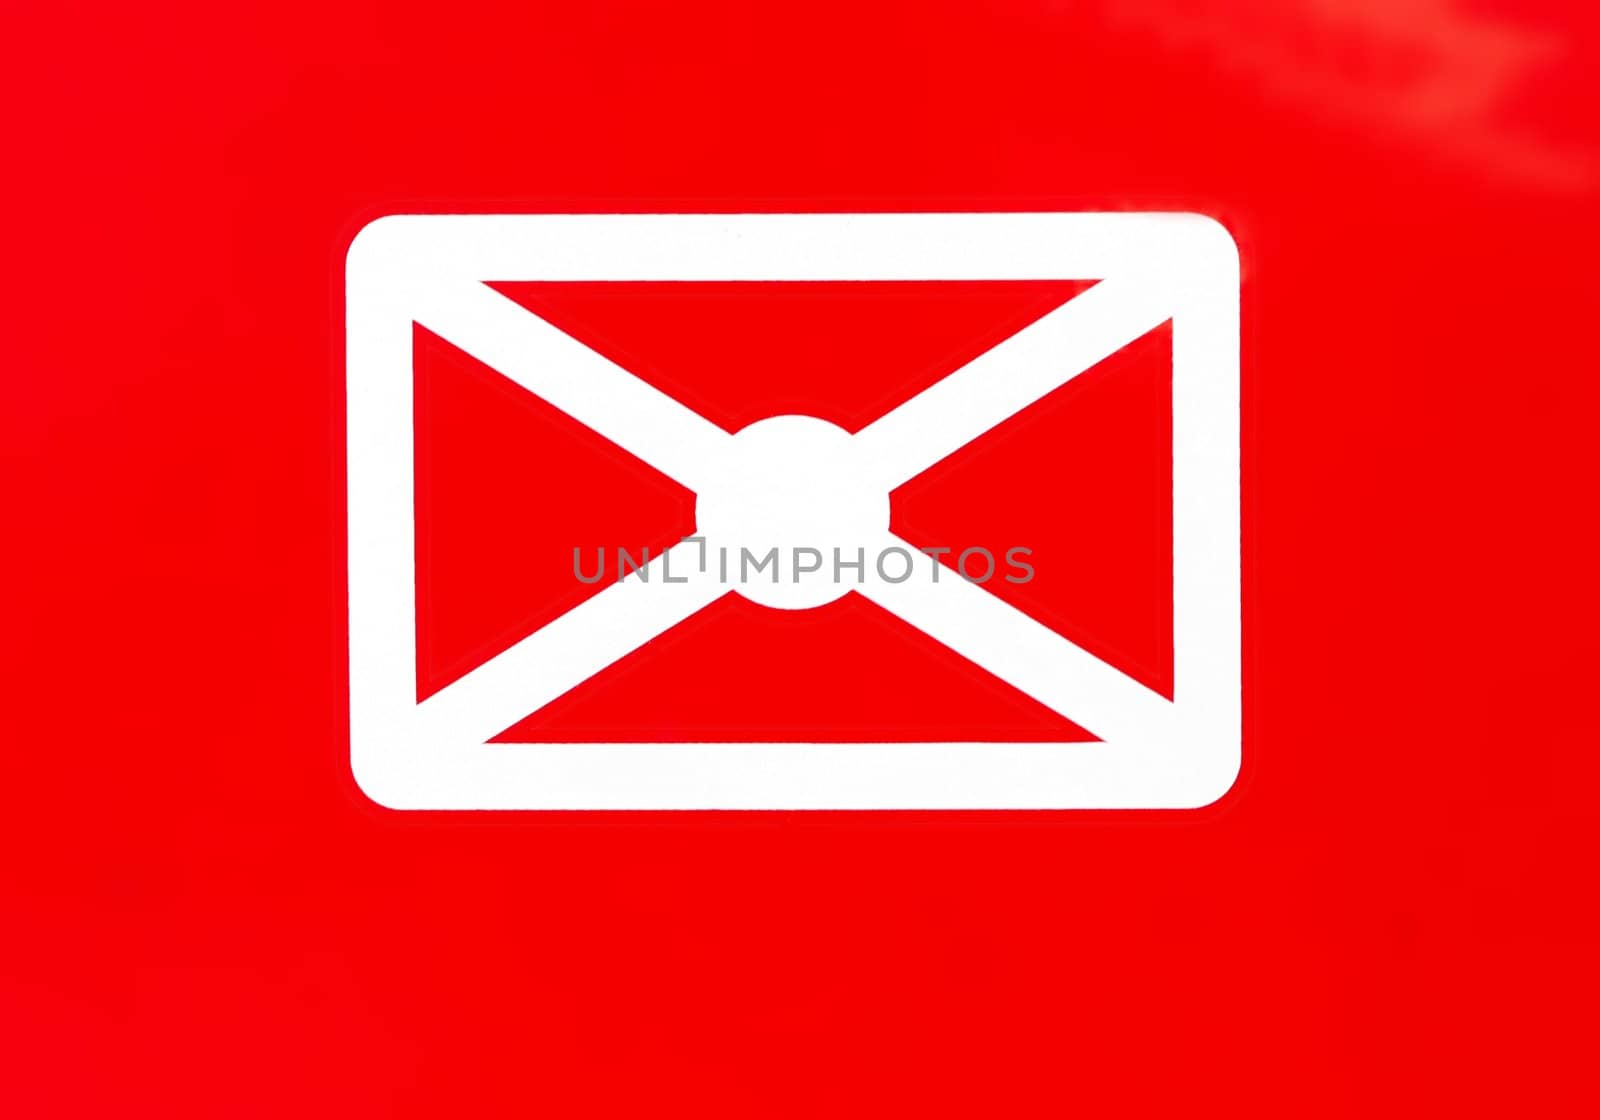 Envelope symbol on red